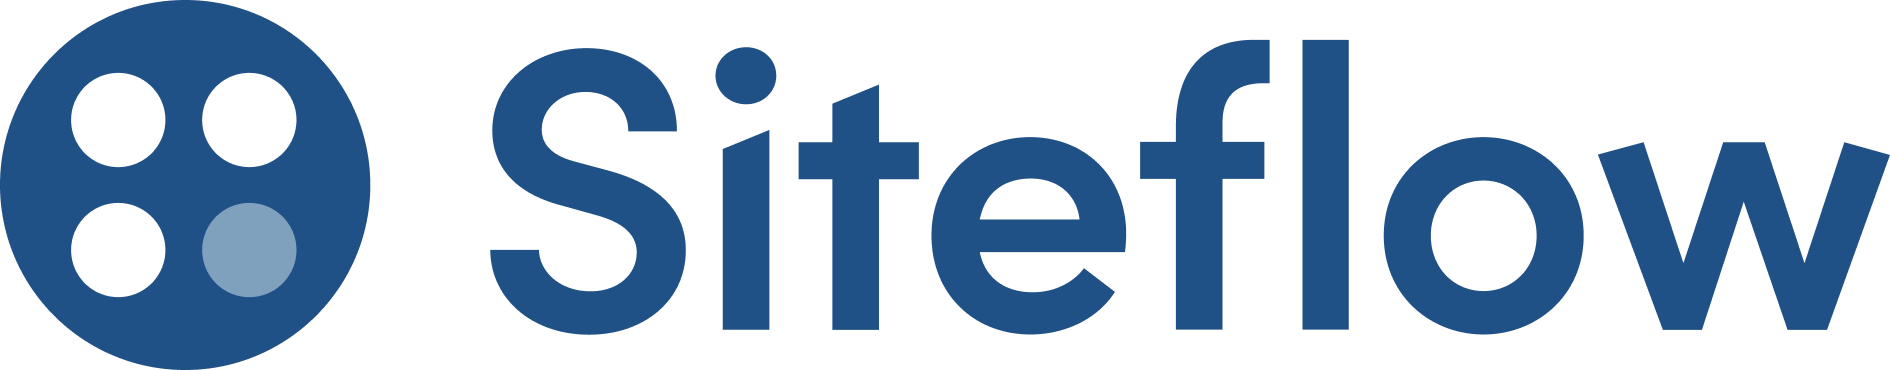 Siteflow-logo-texte-bleu